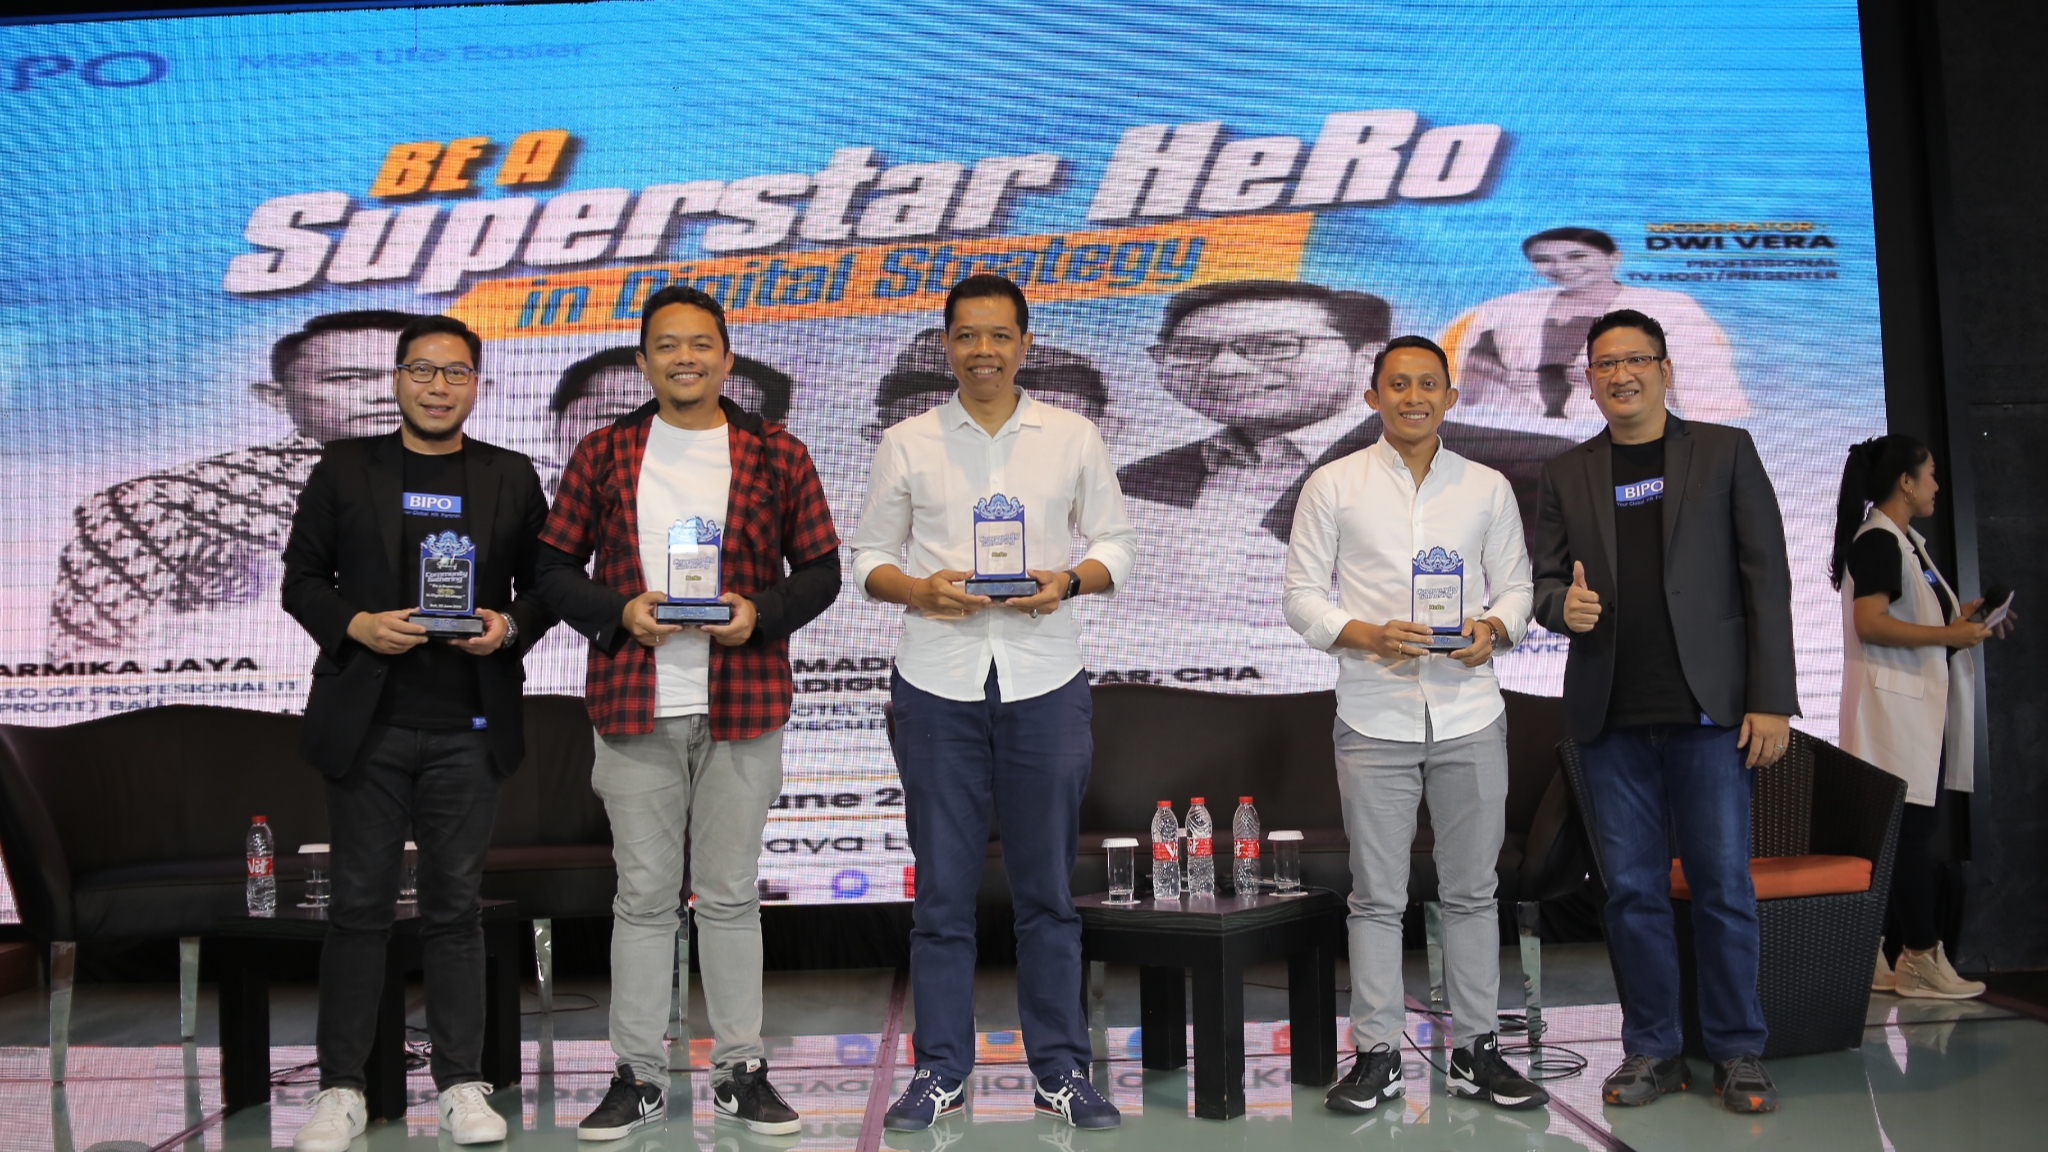 BIPO Service Indonesia Community Gathering dengan tema “Be a Superstar HeRo in Digital Strategy